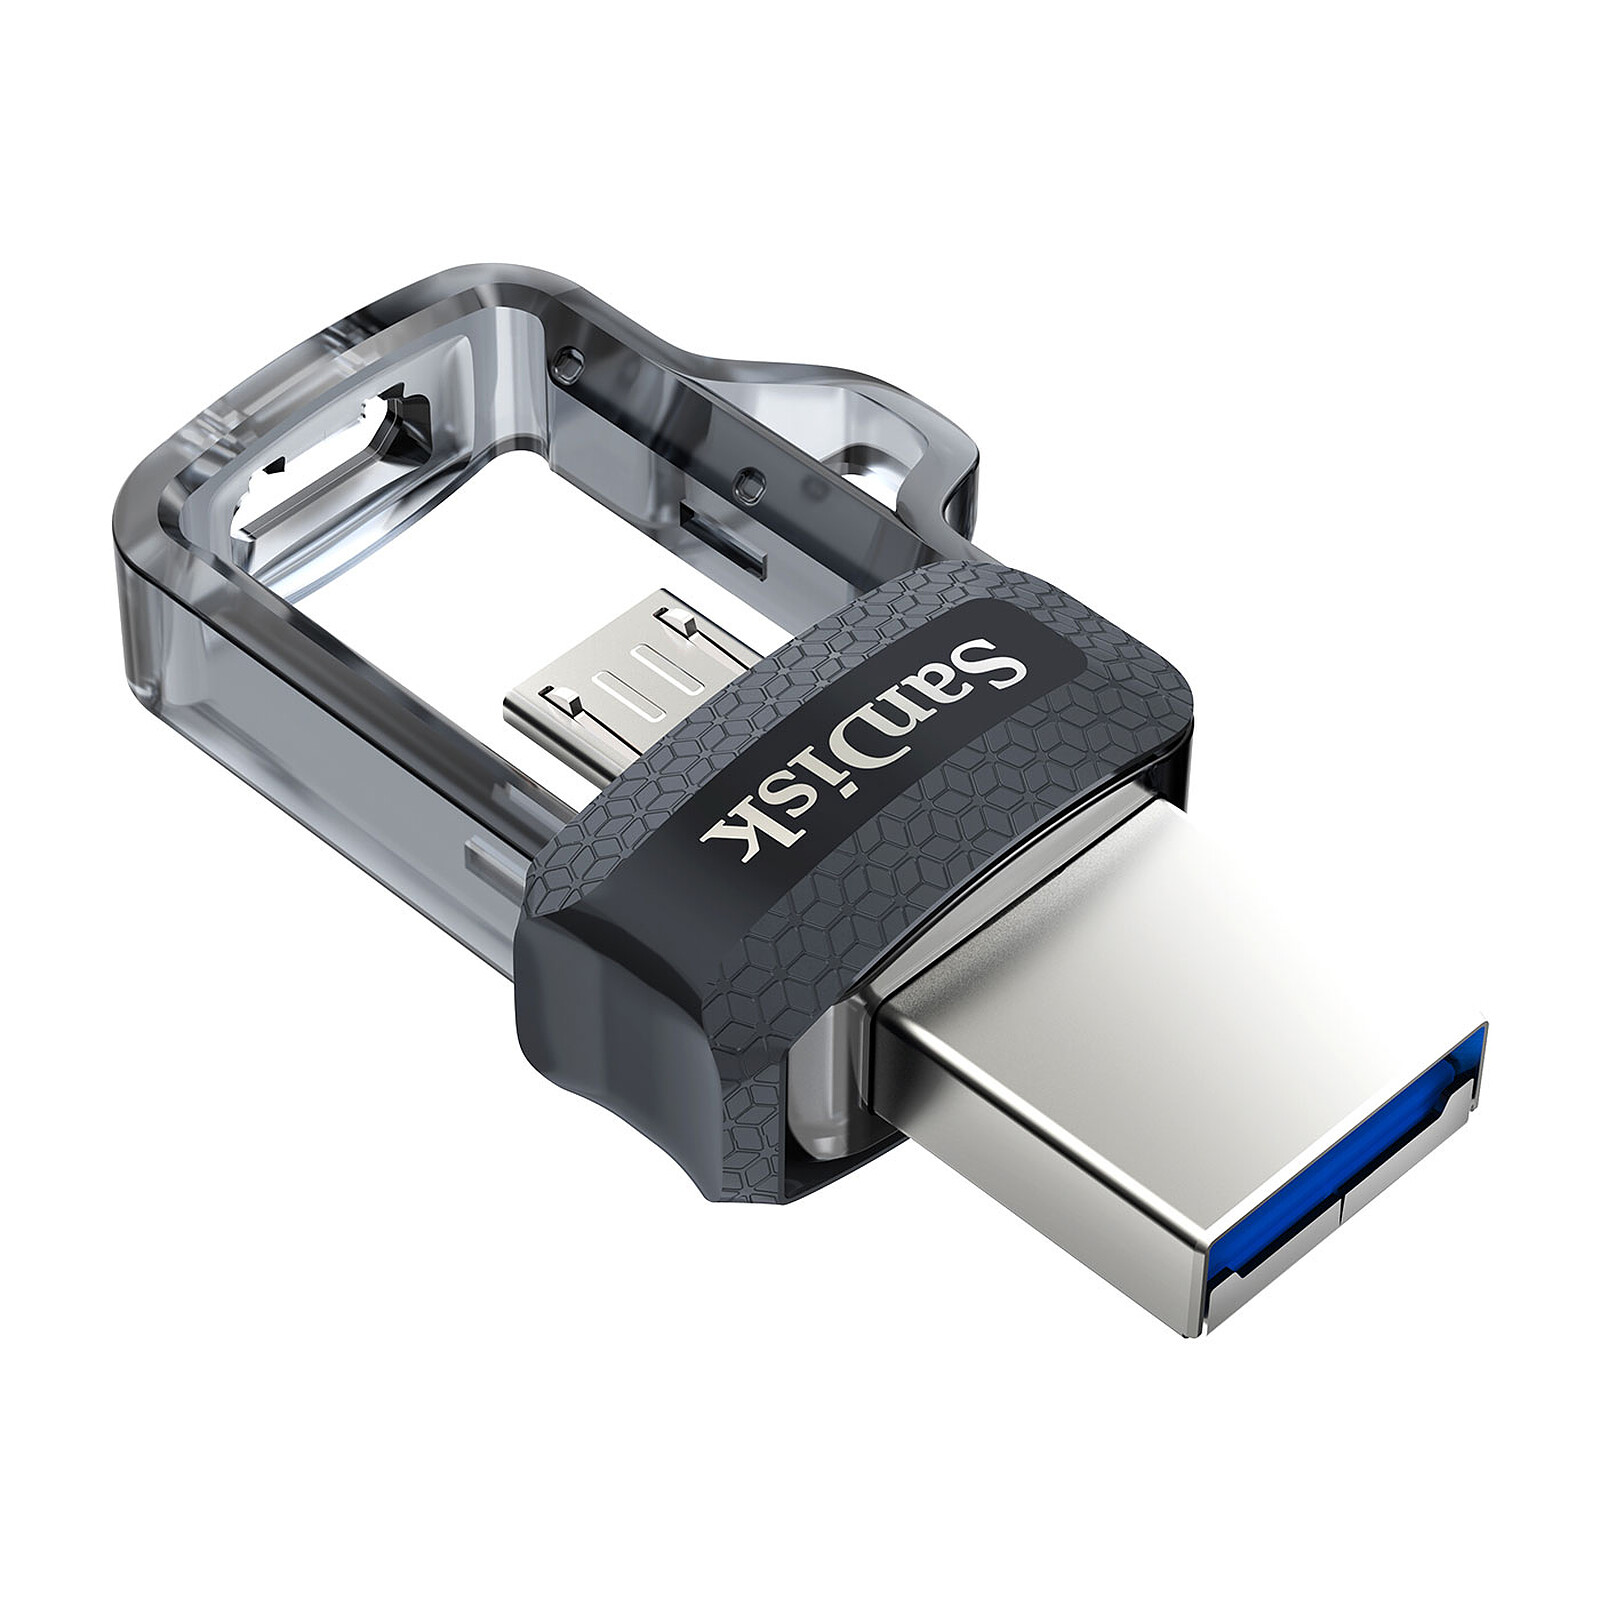 CLÉ USB SAMSUNG 3.0 2To Haute Vitesse Flash 2TB EUR 15,00